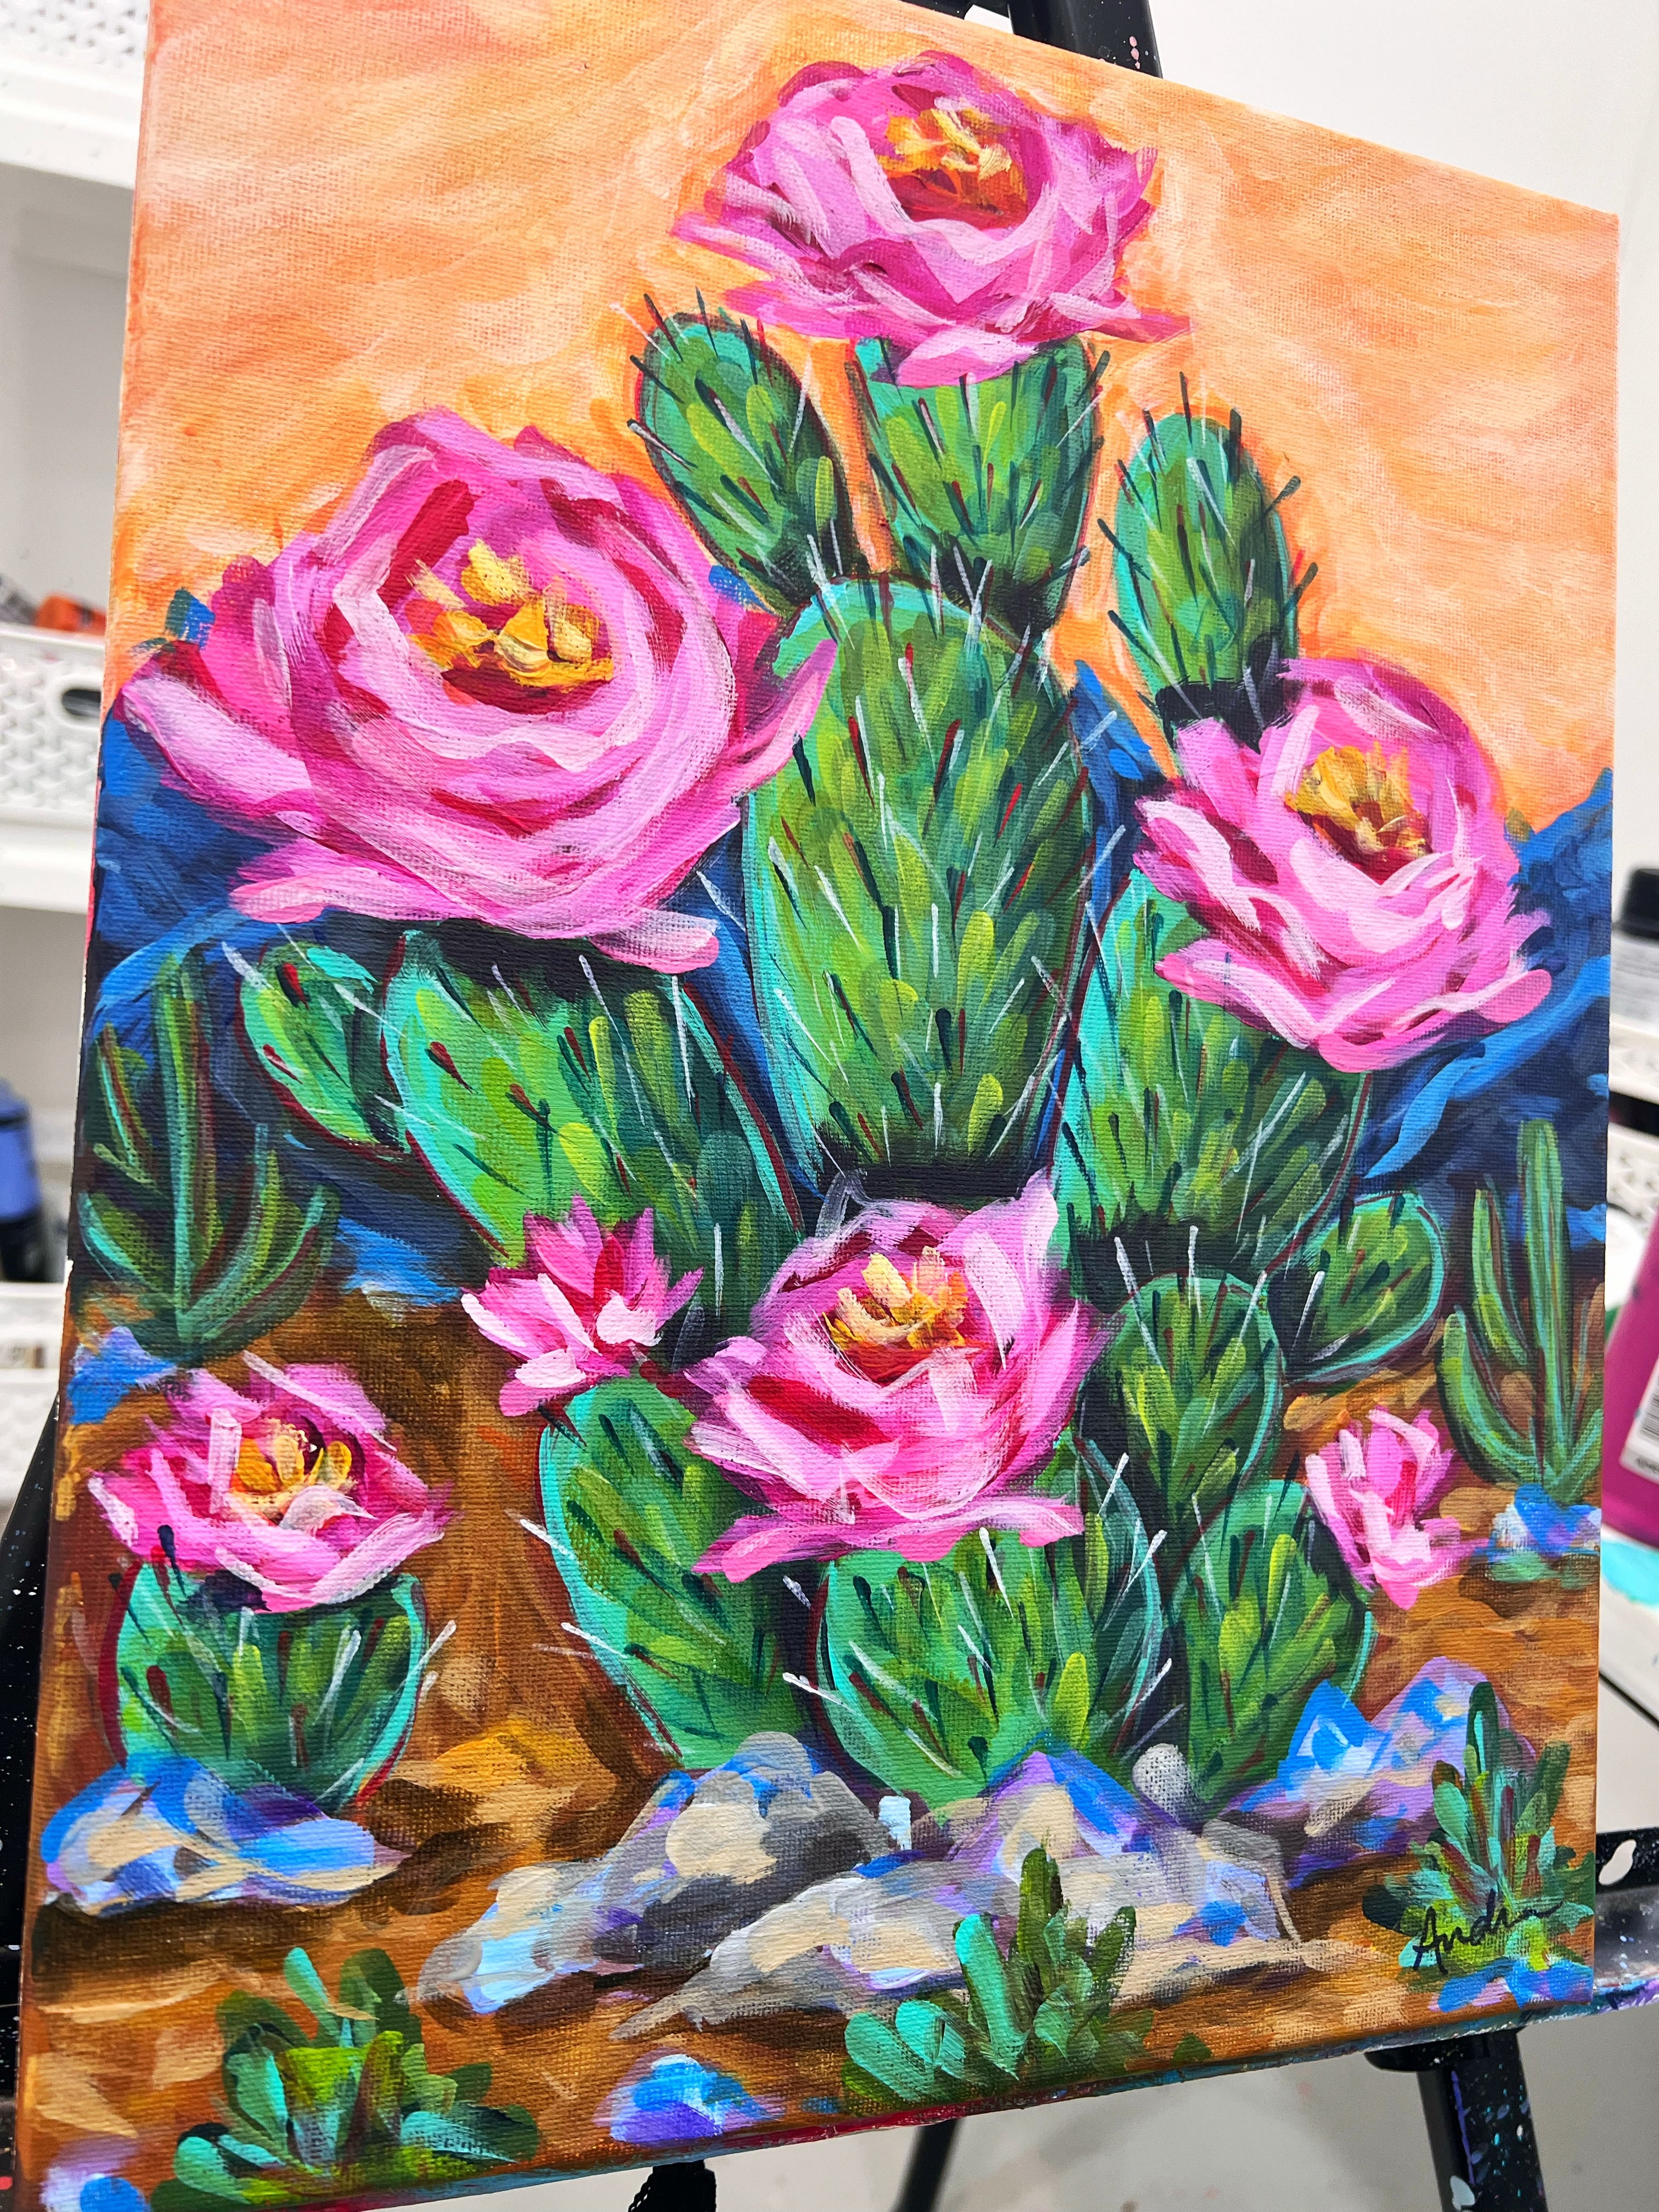 Cactus 11x14 Original Painting on Canvas